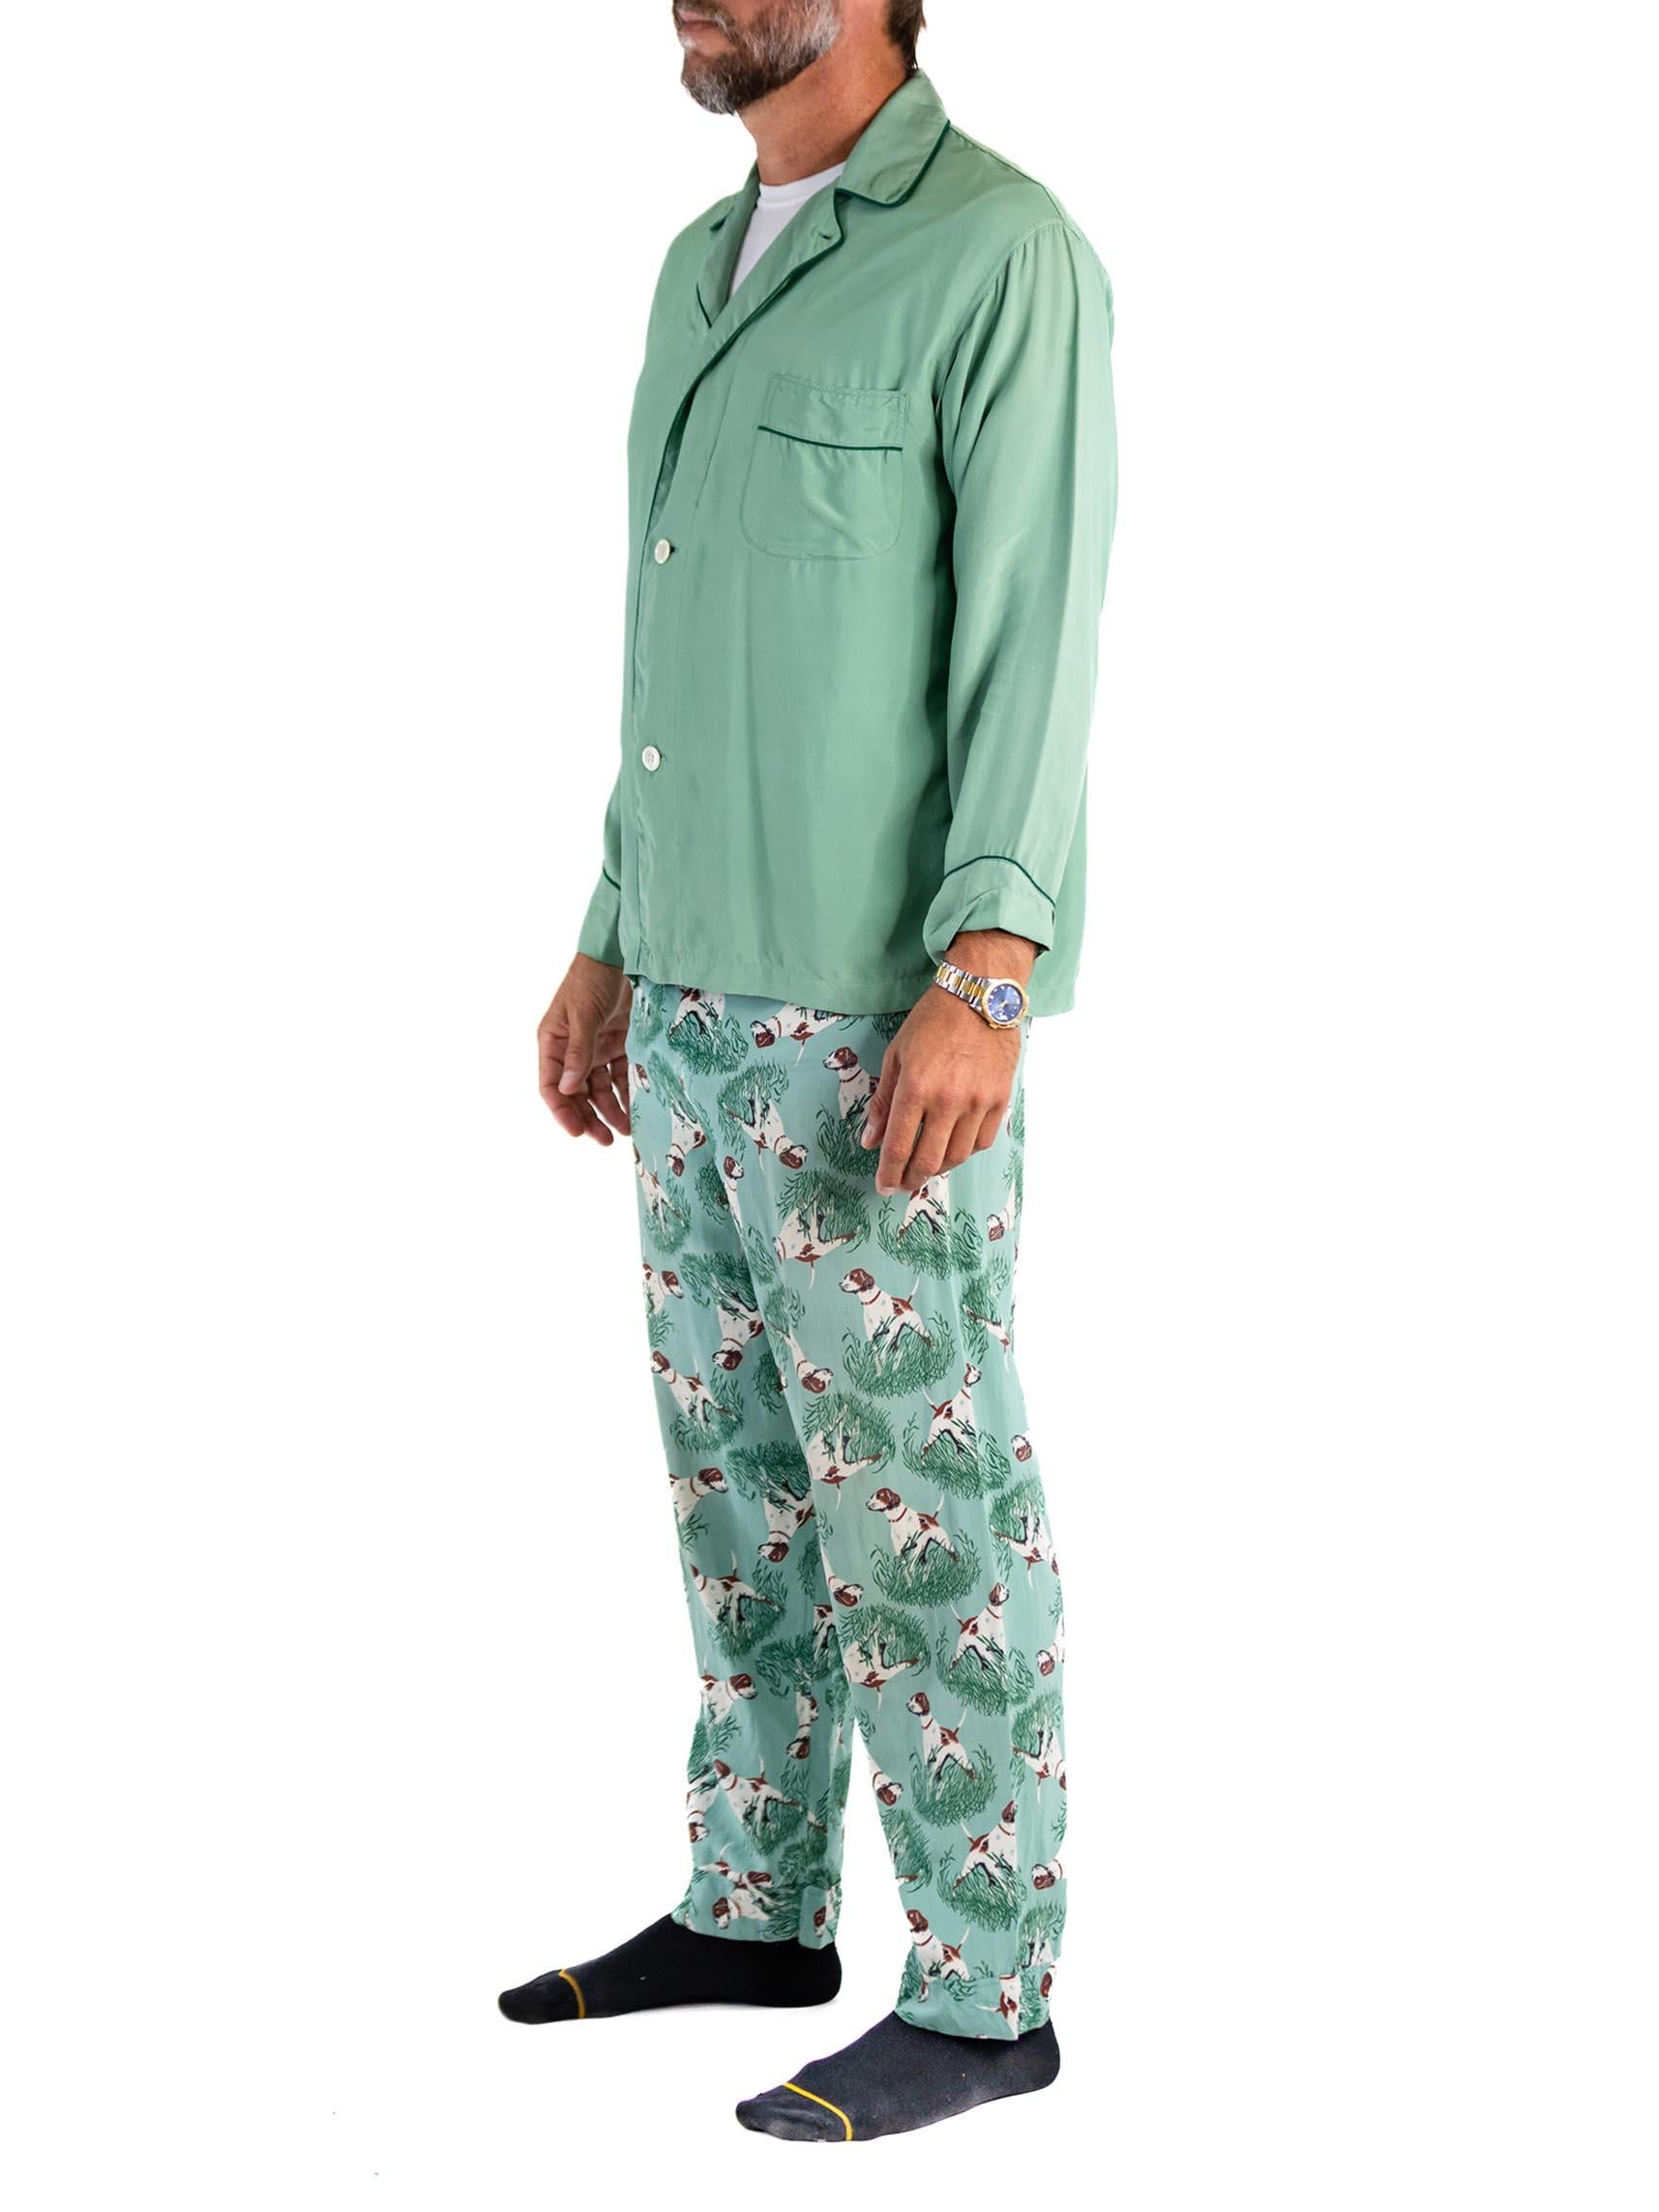 Men's 1940S Teal Rayon Solid Top And Hunting Dog Pants Pajamas Set For Sale